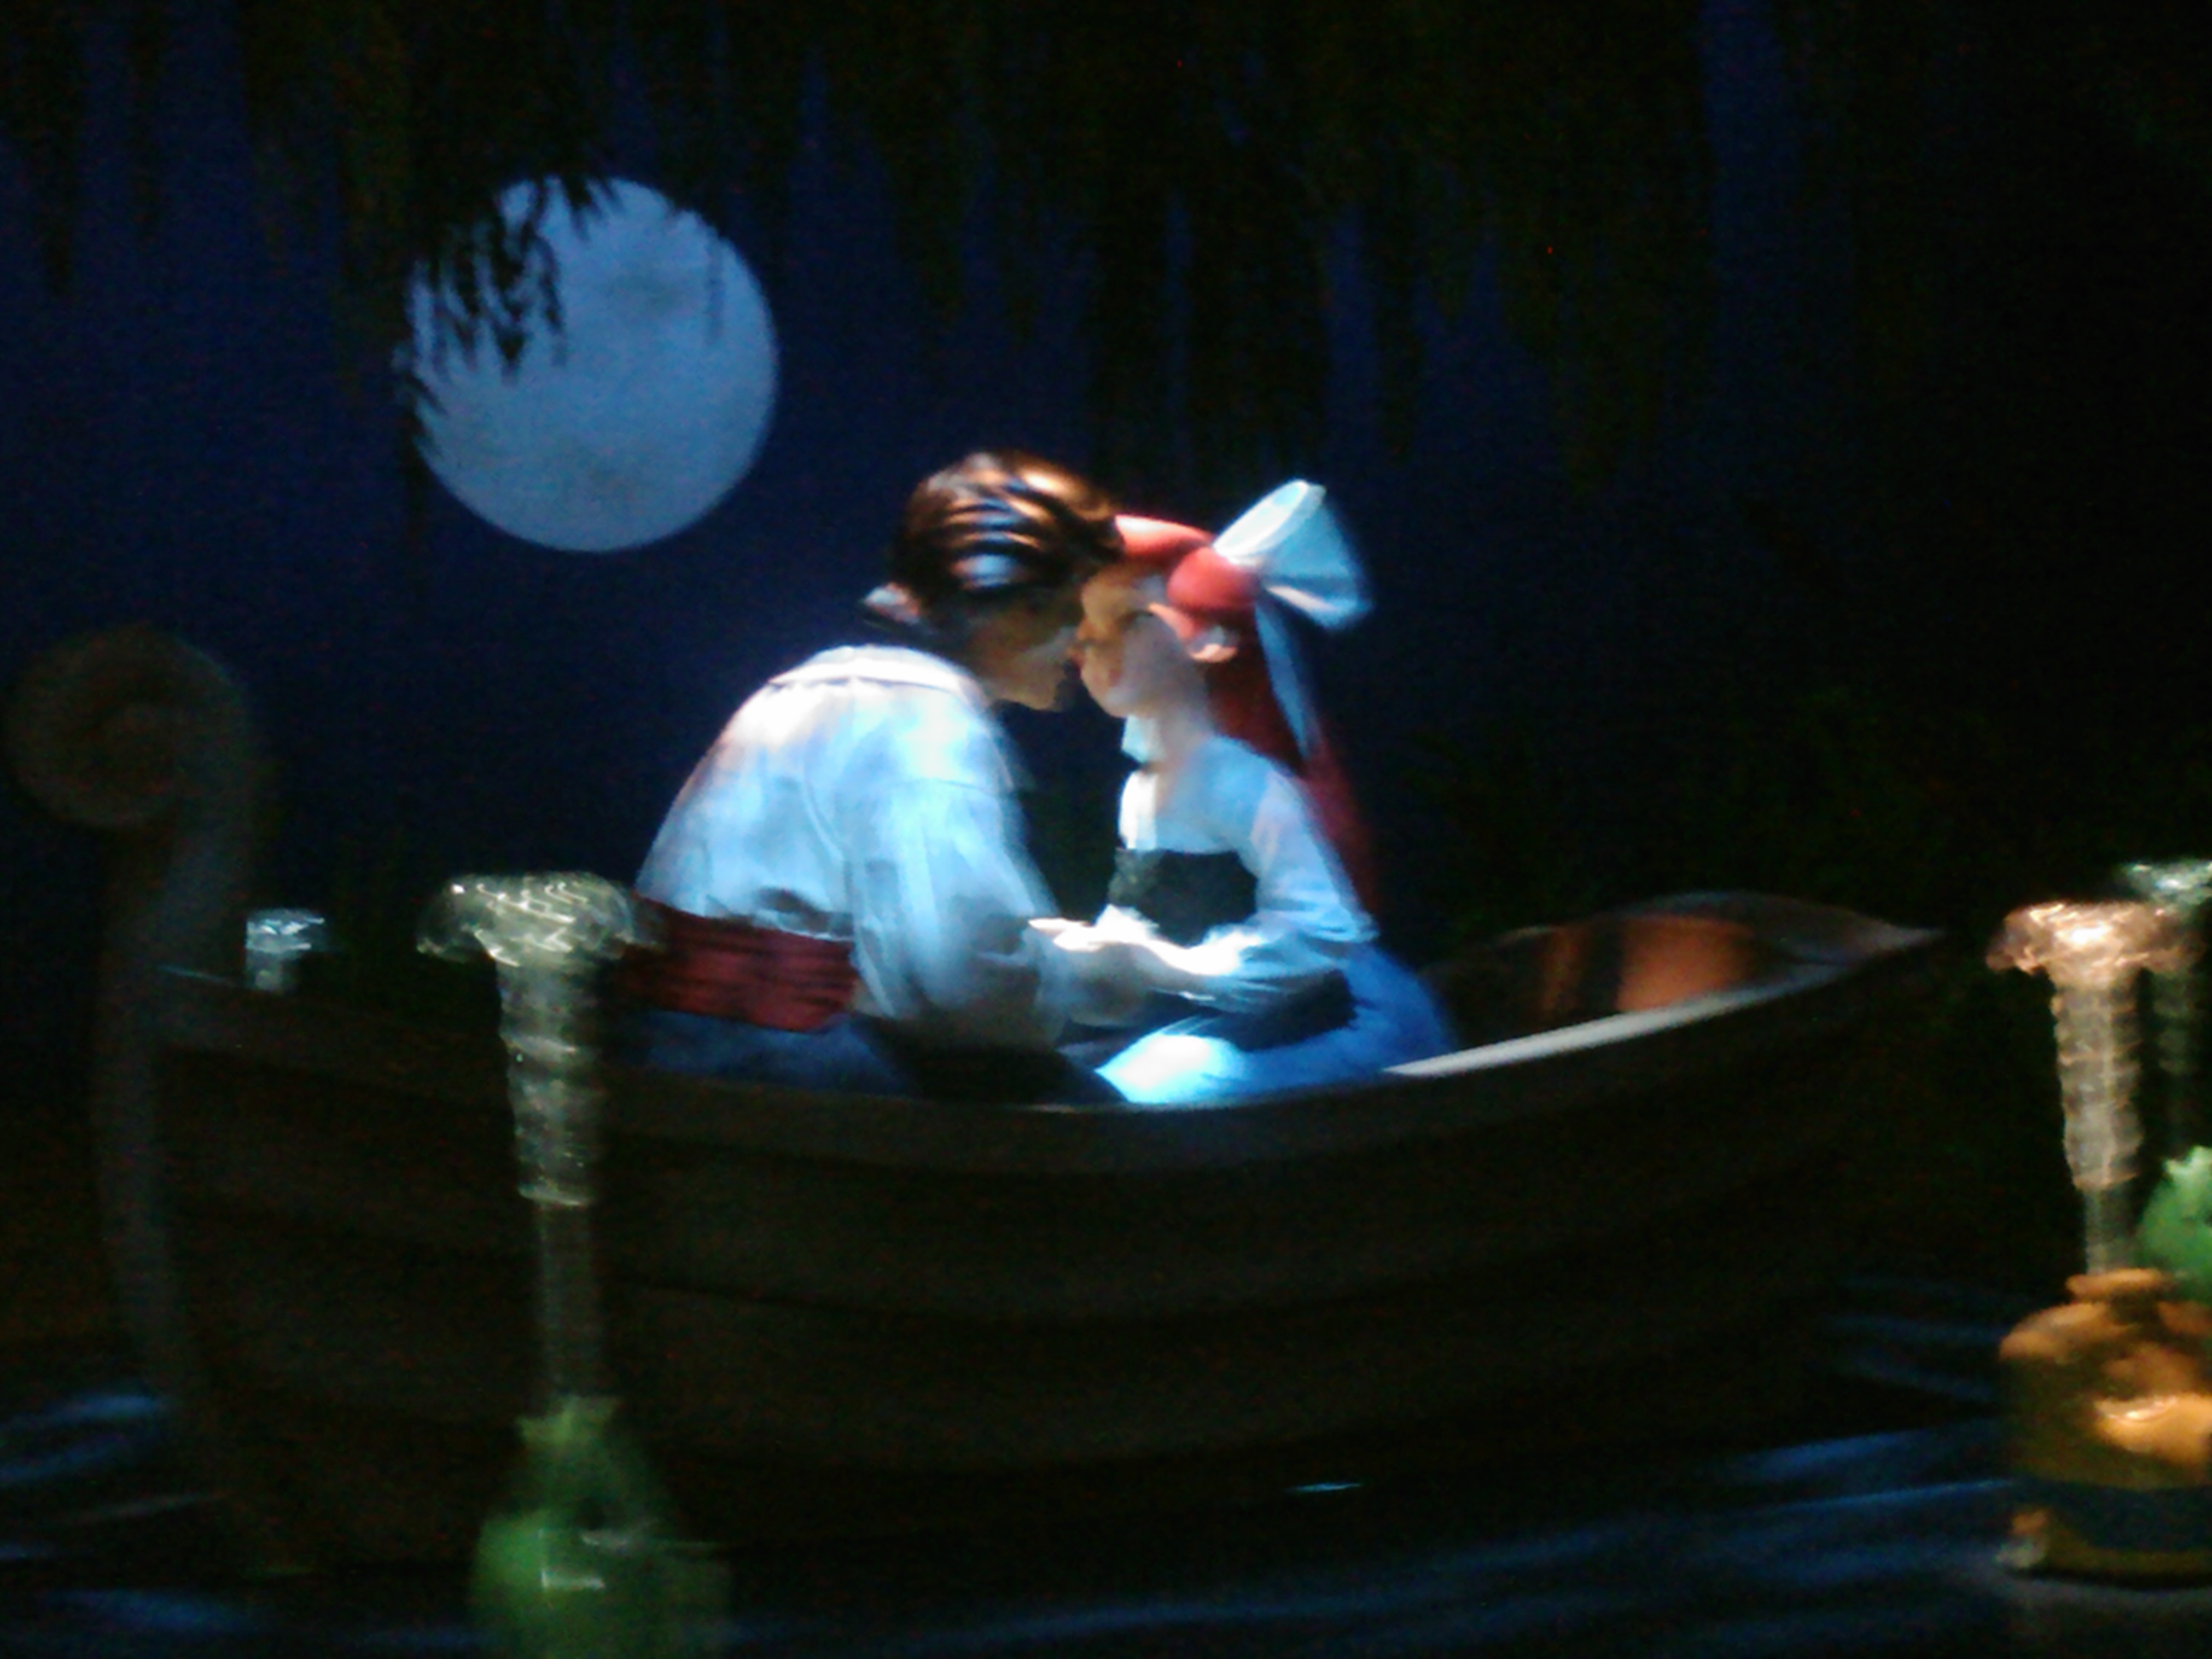 The Little Mermaid- Ariel’s Undersea Adventure at Disney’s California Adventure